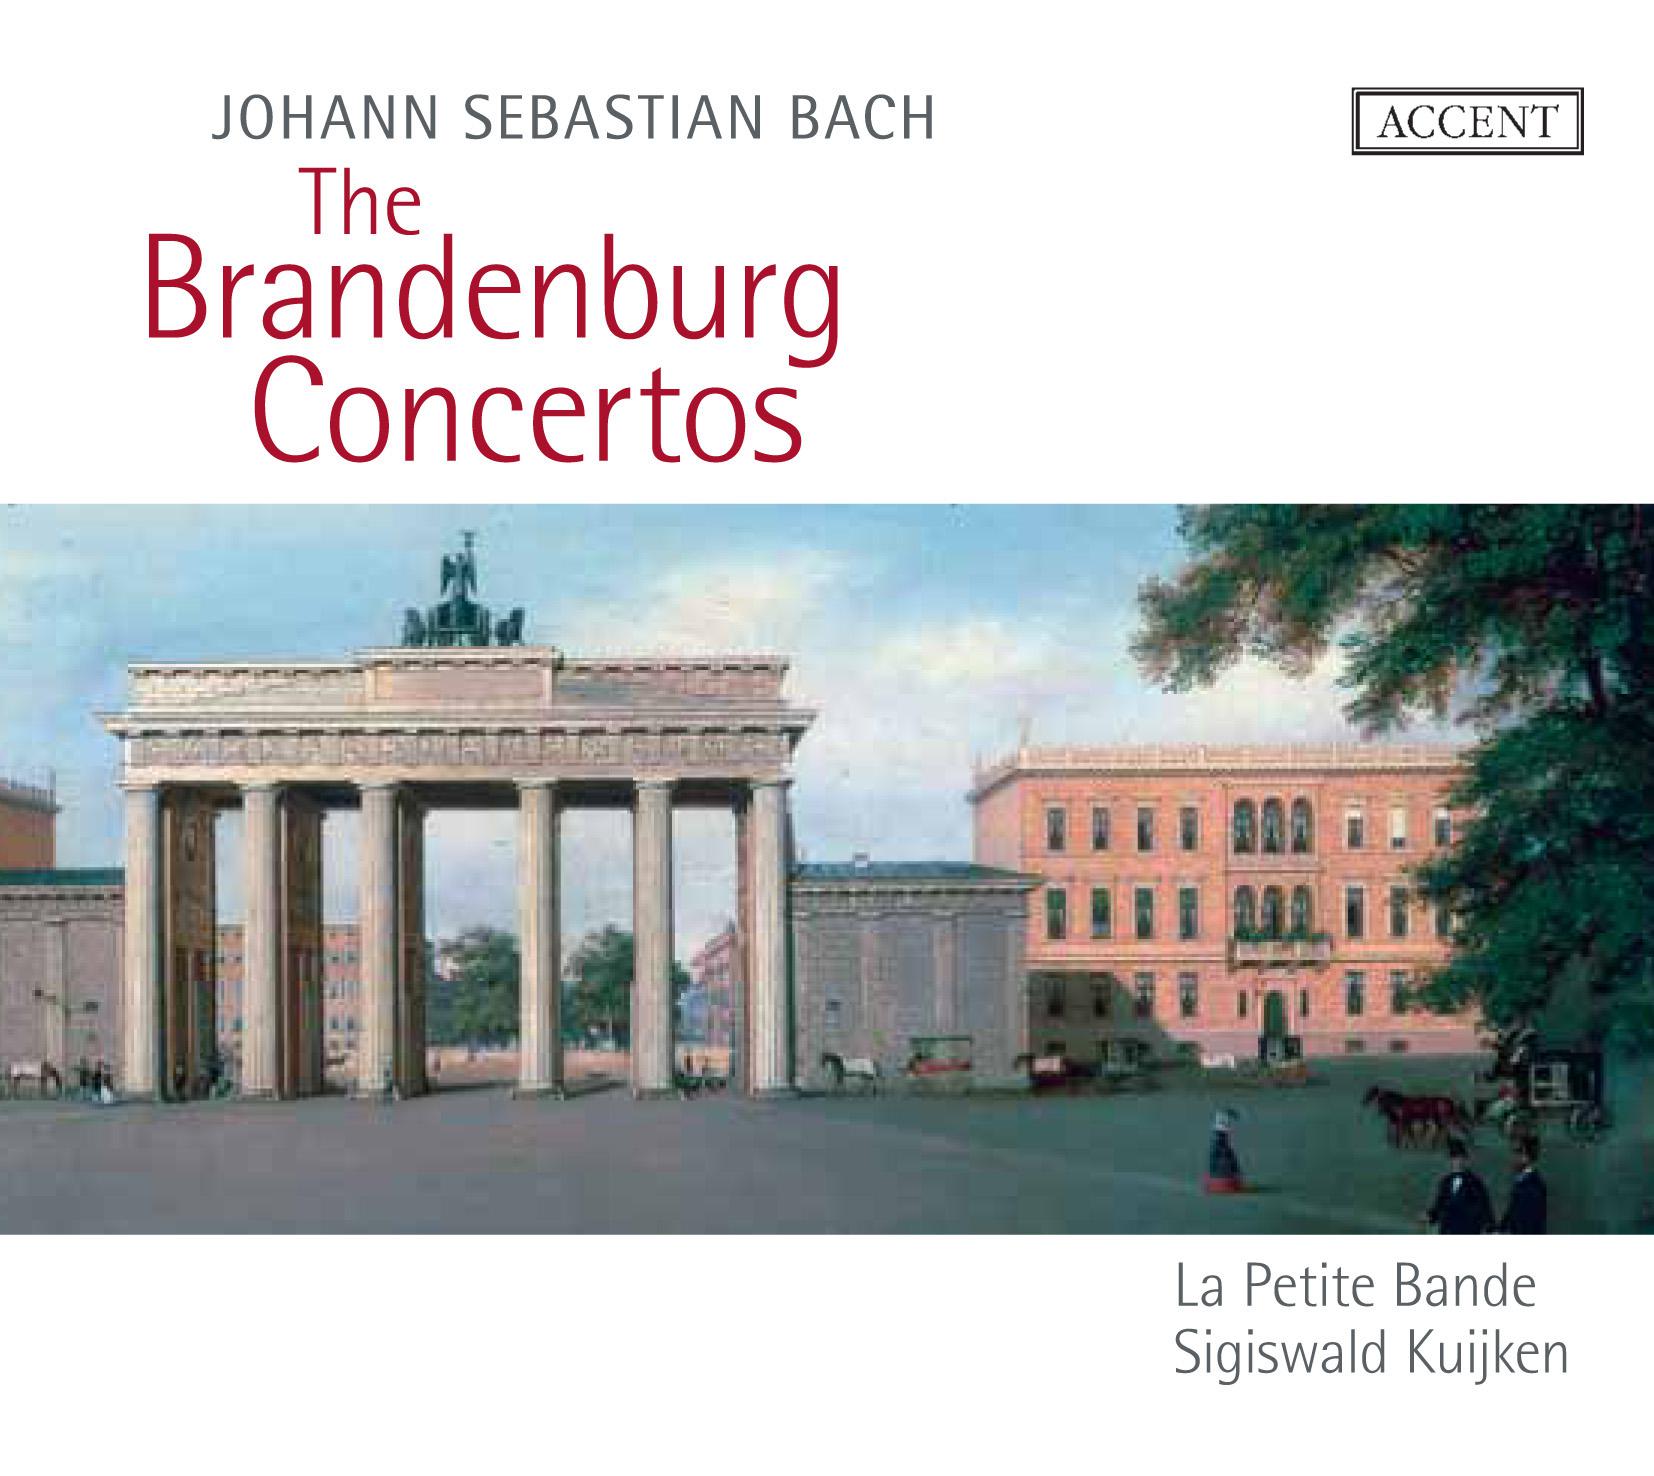 Brandenburg Concerto No. 3 in G Major, BWV 1048: II. Adagio - III. Allegro